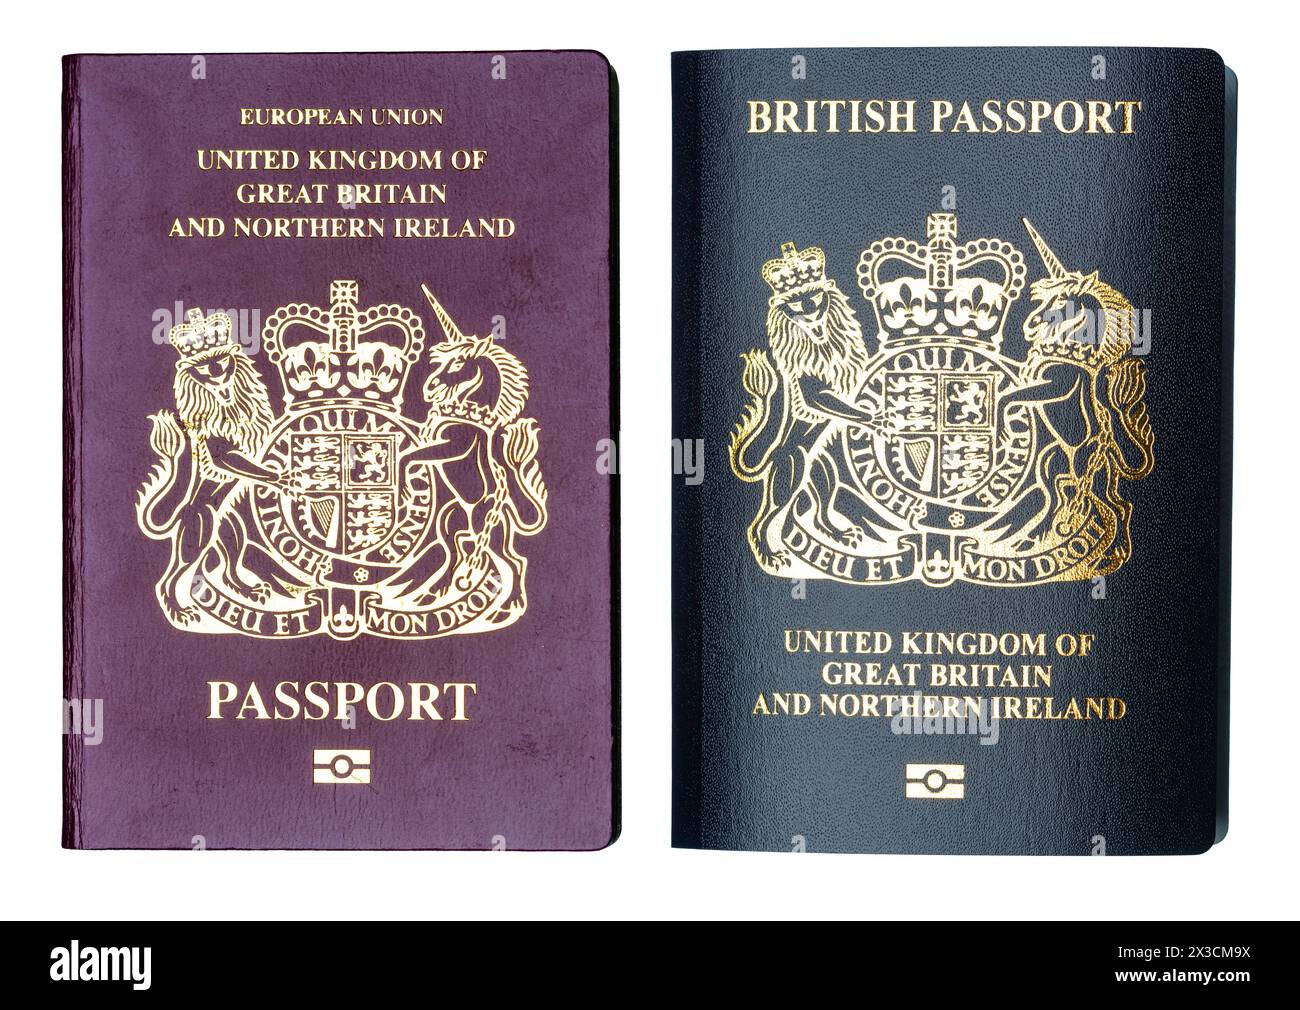 An old burgundy red British passport next to a new Blue British Passport Stock Photo